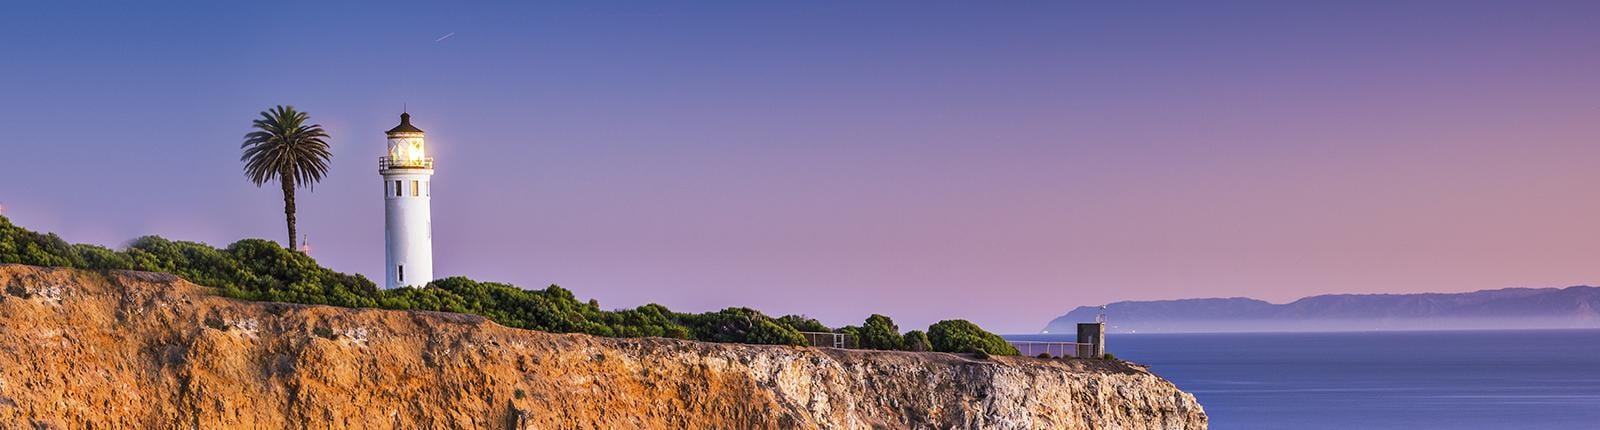 Beatiful view of a lighthouse on the coast of Catalina Island, California